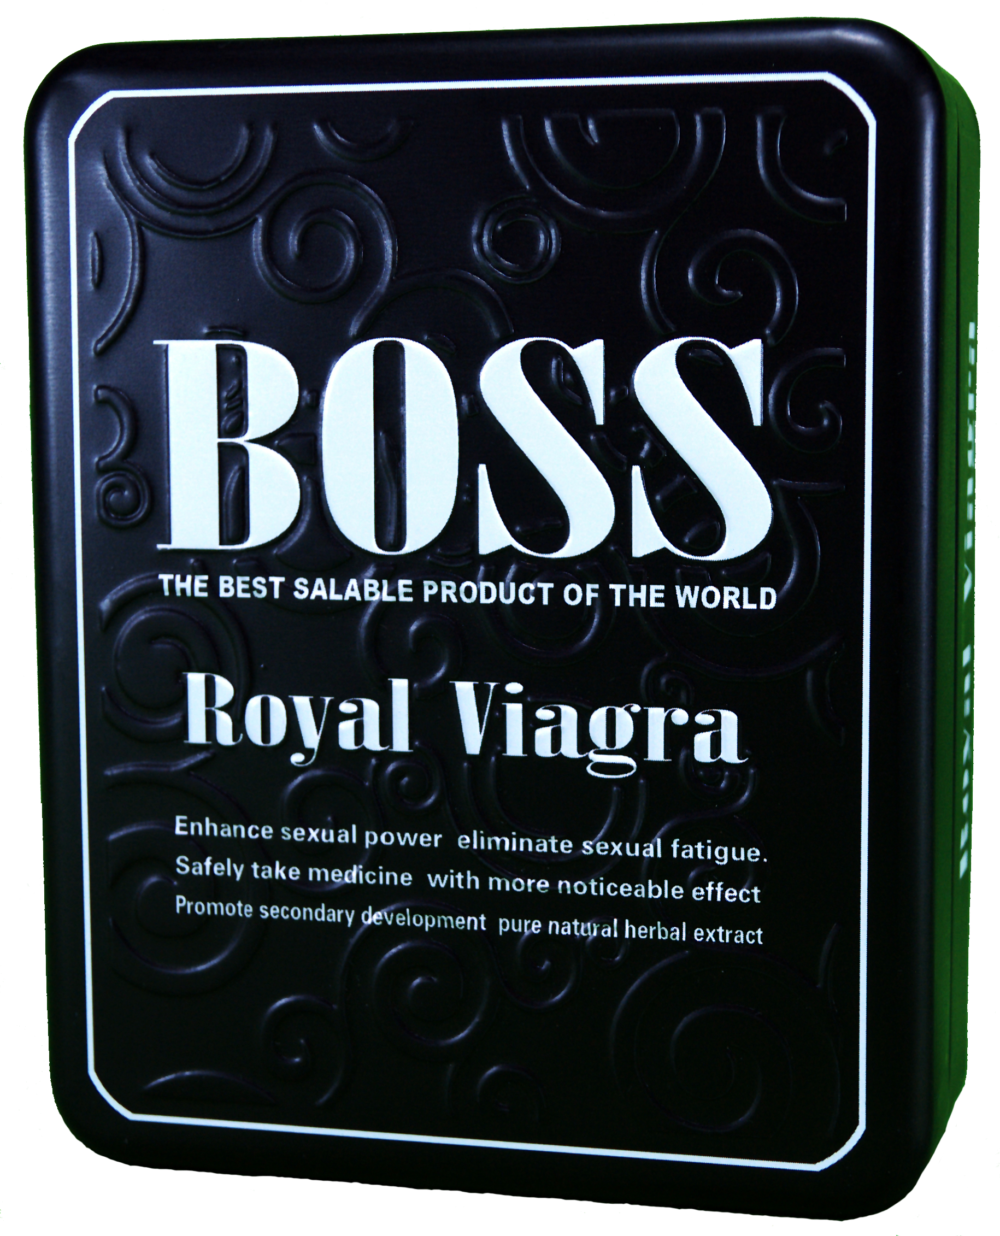 Boss royal босс роял. Препарат Boss Royal viagra. БАДЫ для мужчин босс Роял виагра. Boss Royal viagra инструкция.